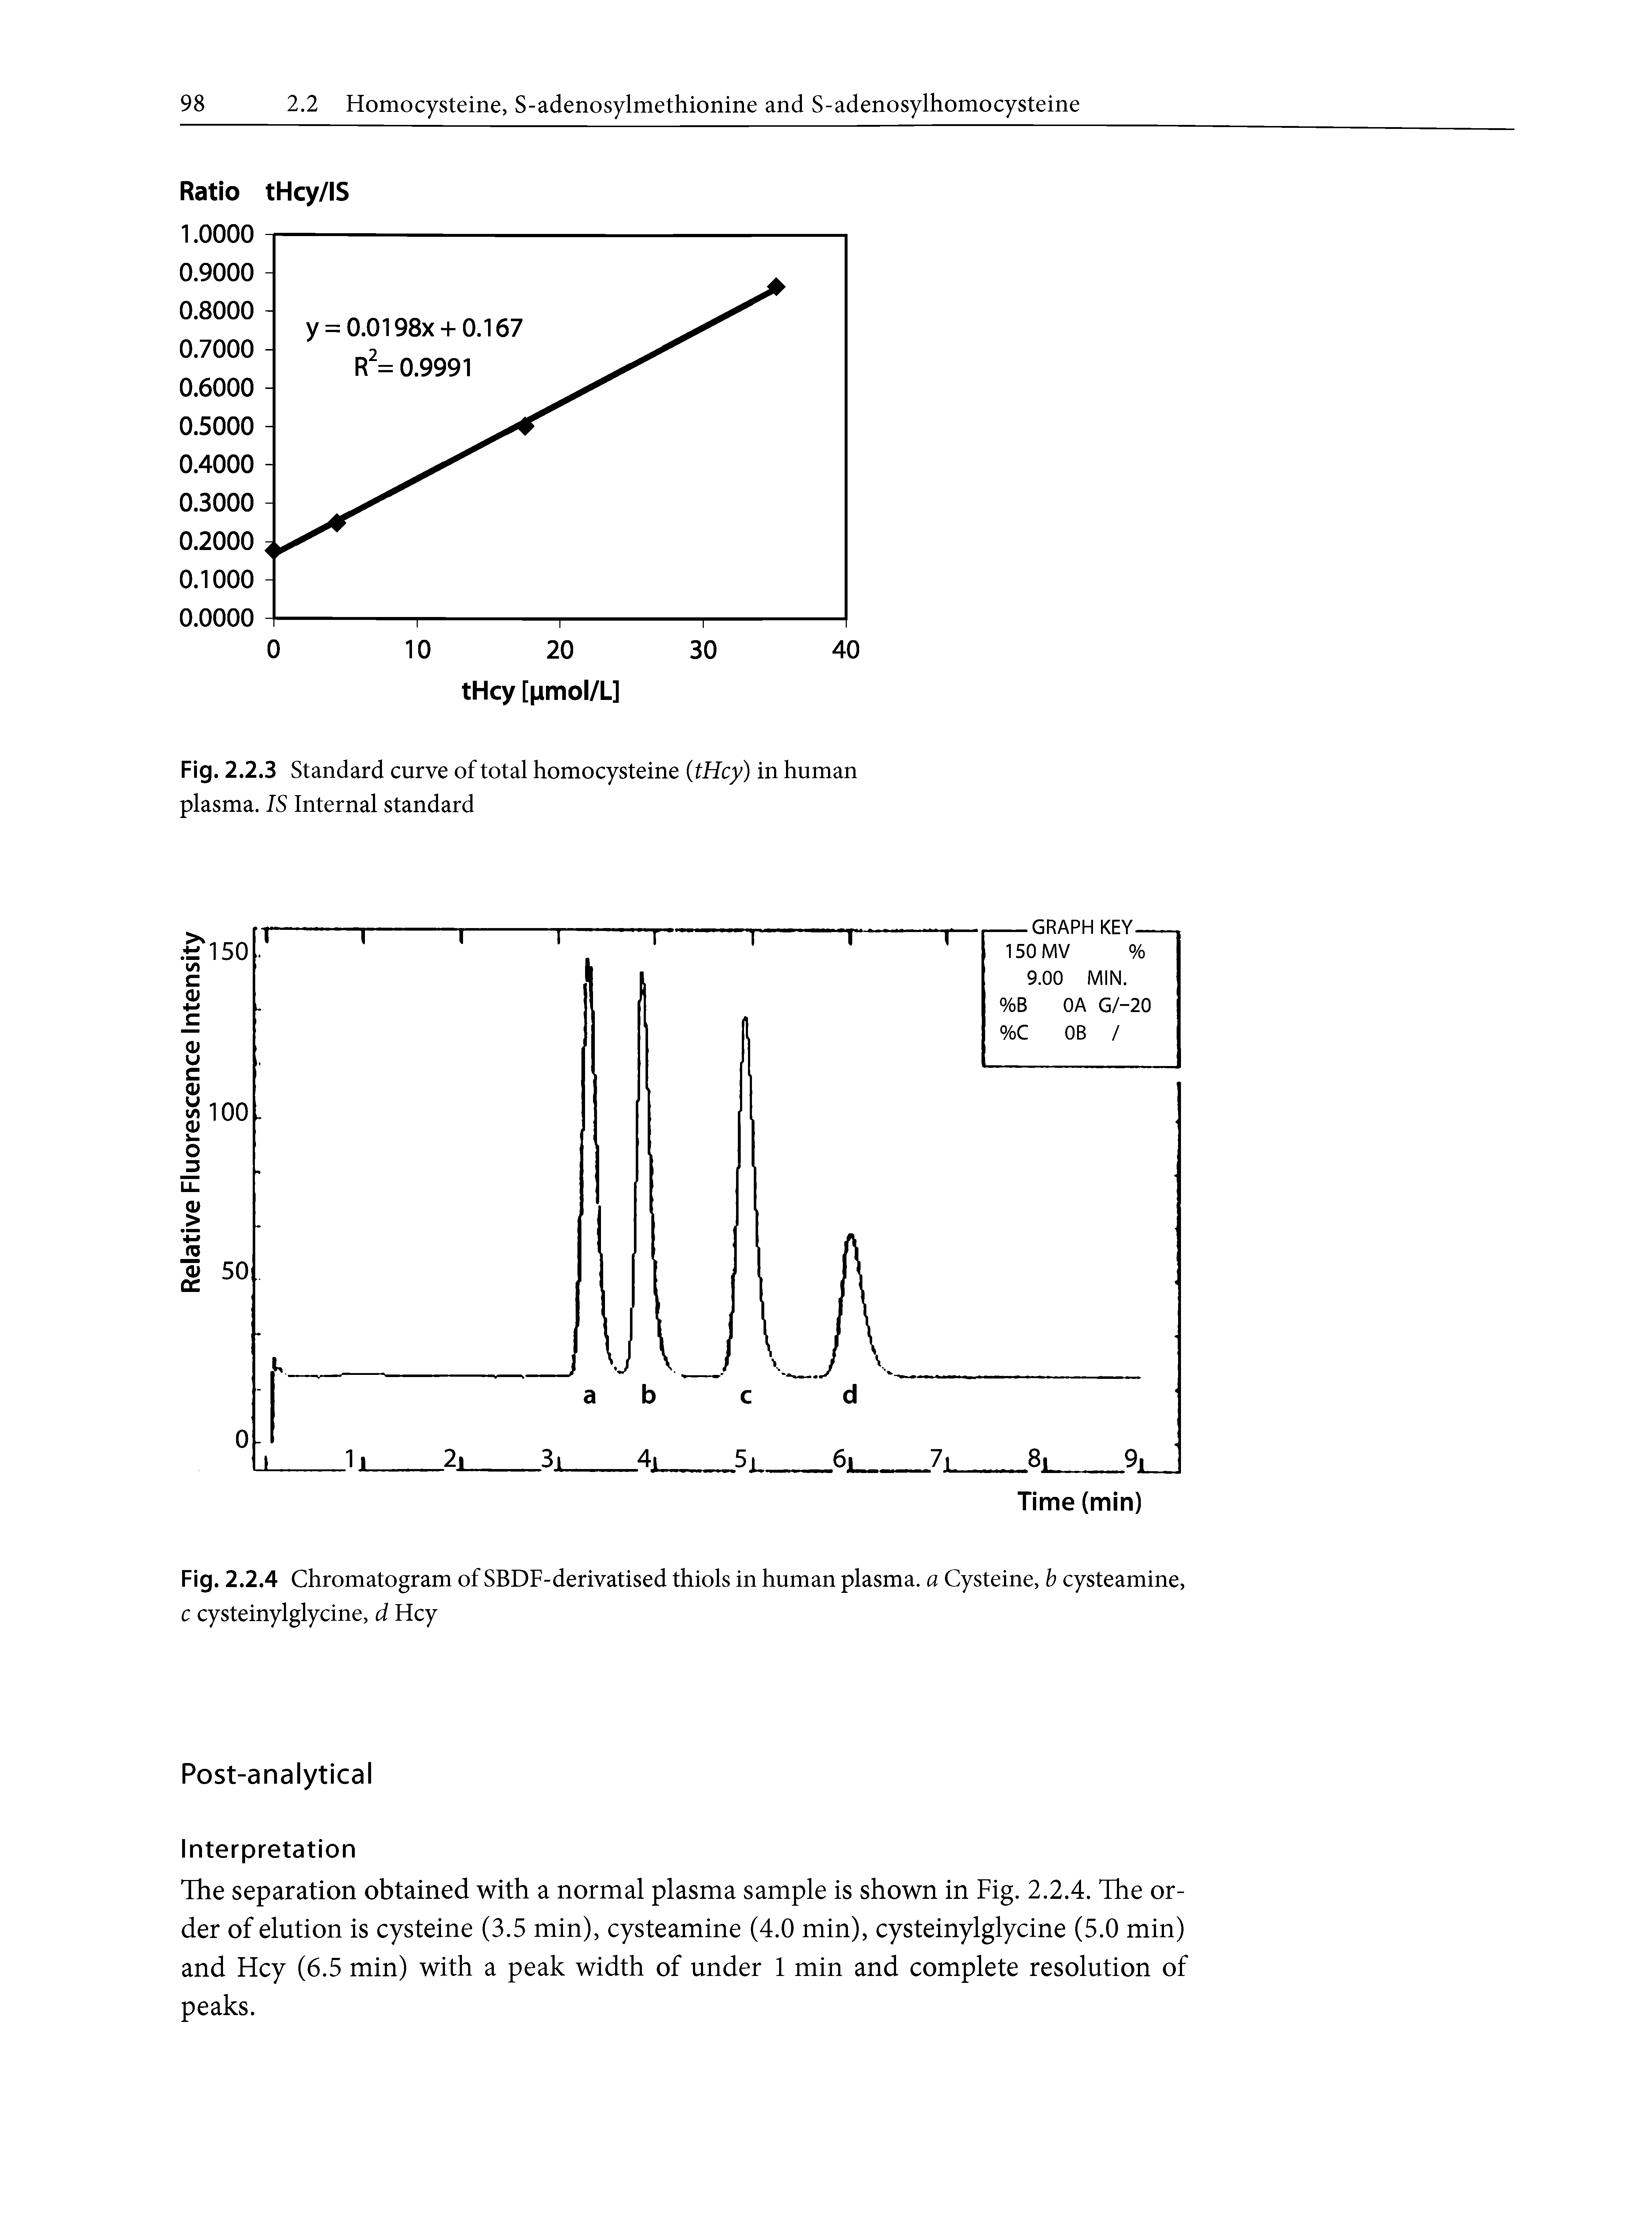 Fig. 2.2.3 Standard curve of total homocysteine (tHcy) in human plasma. IS Internal standard...